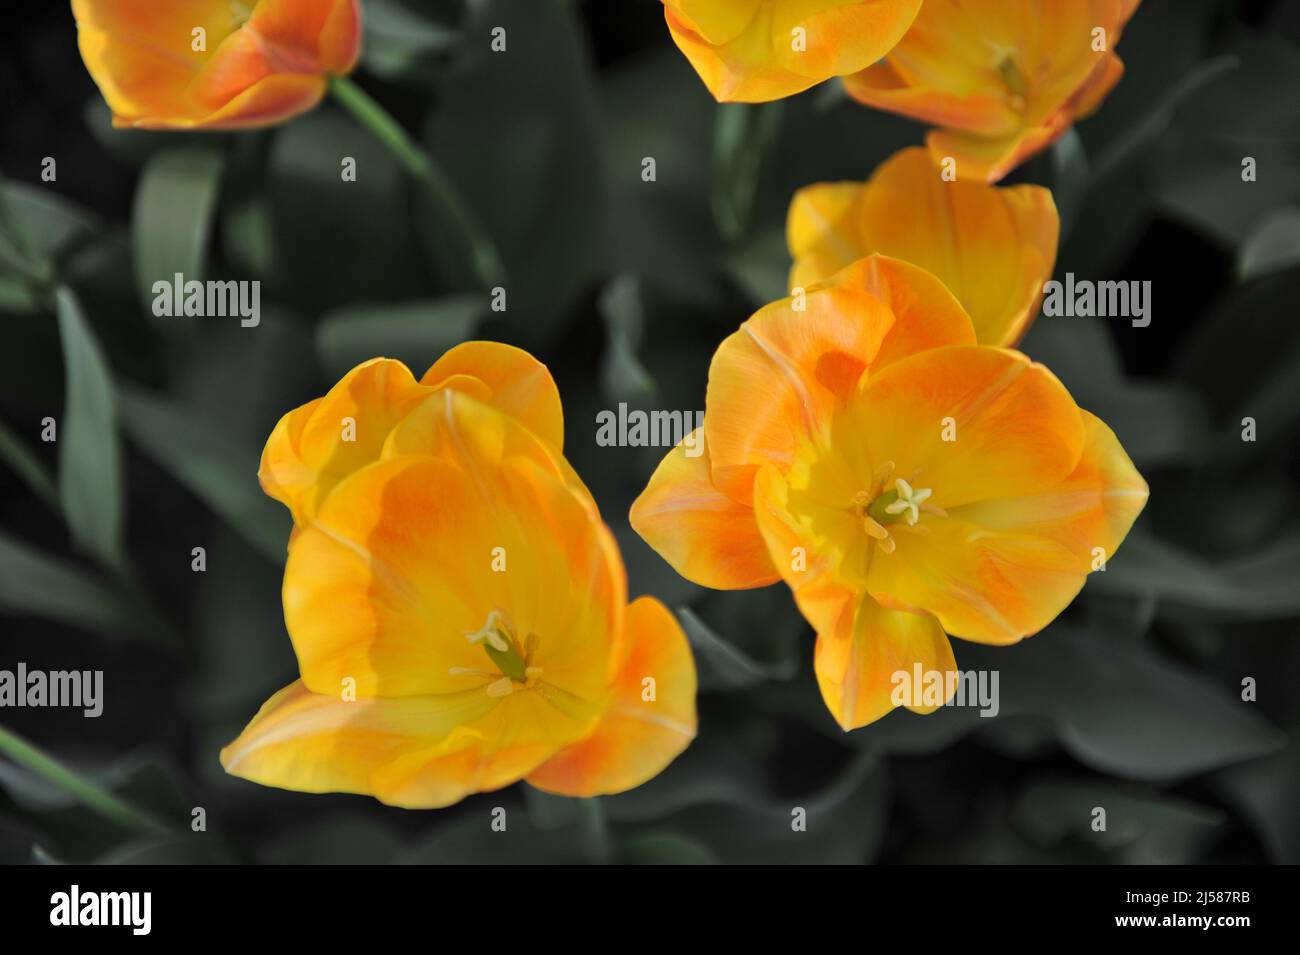 Orange-yellow Triumph tulips (Tulipa) Golden Dynasty bloom in a garden in March Stock Photo